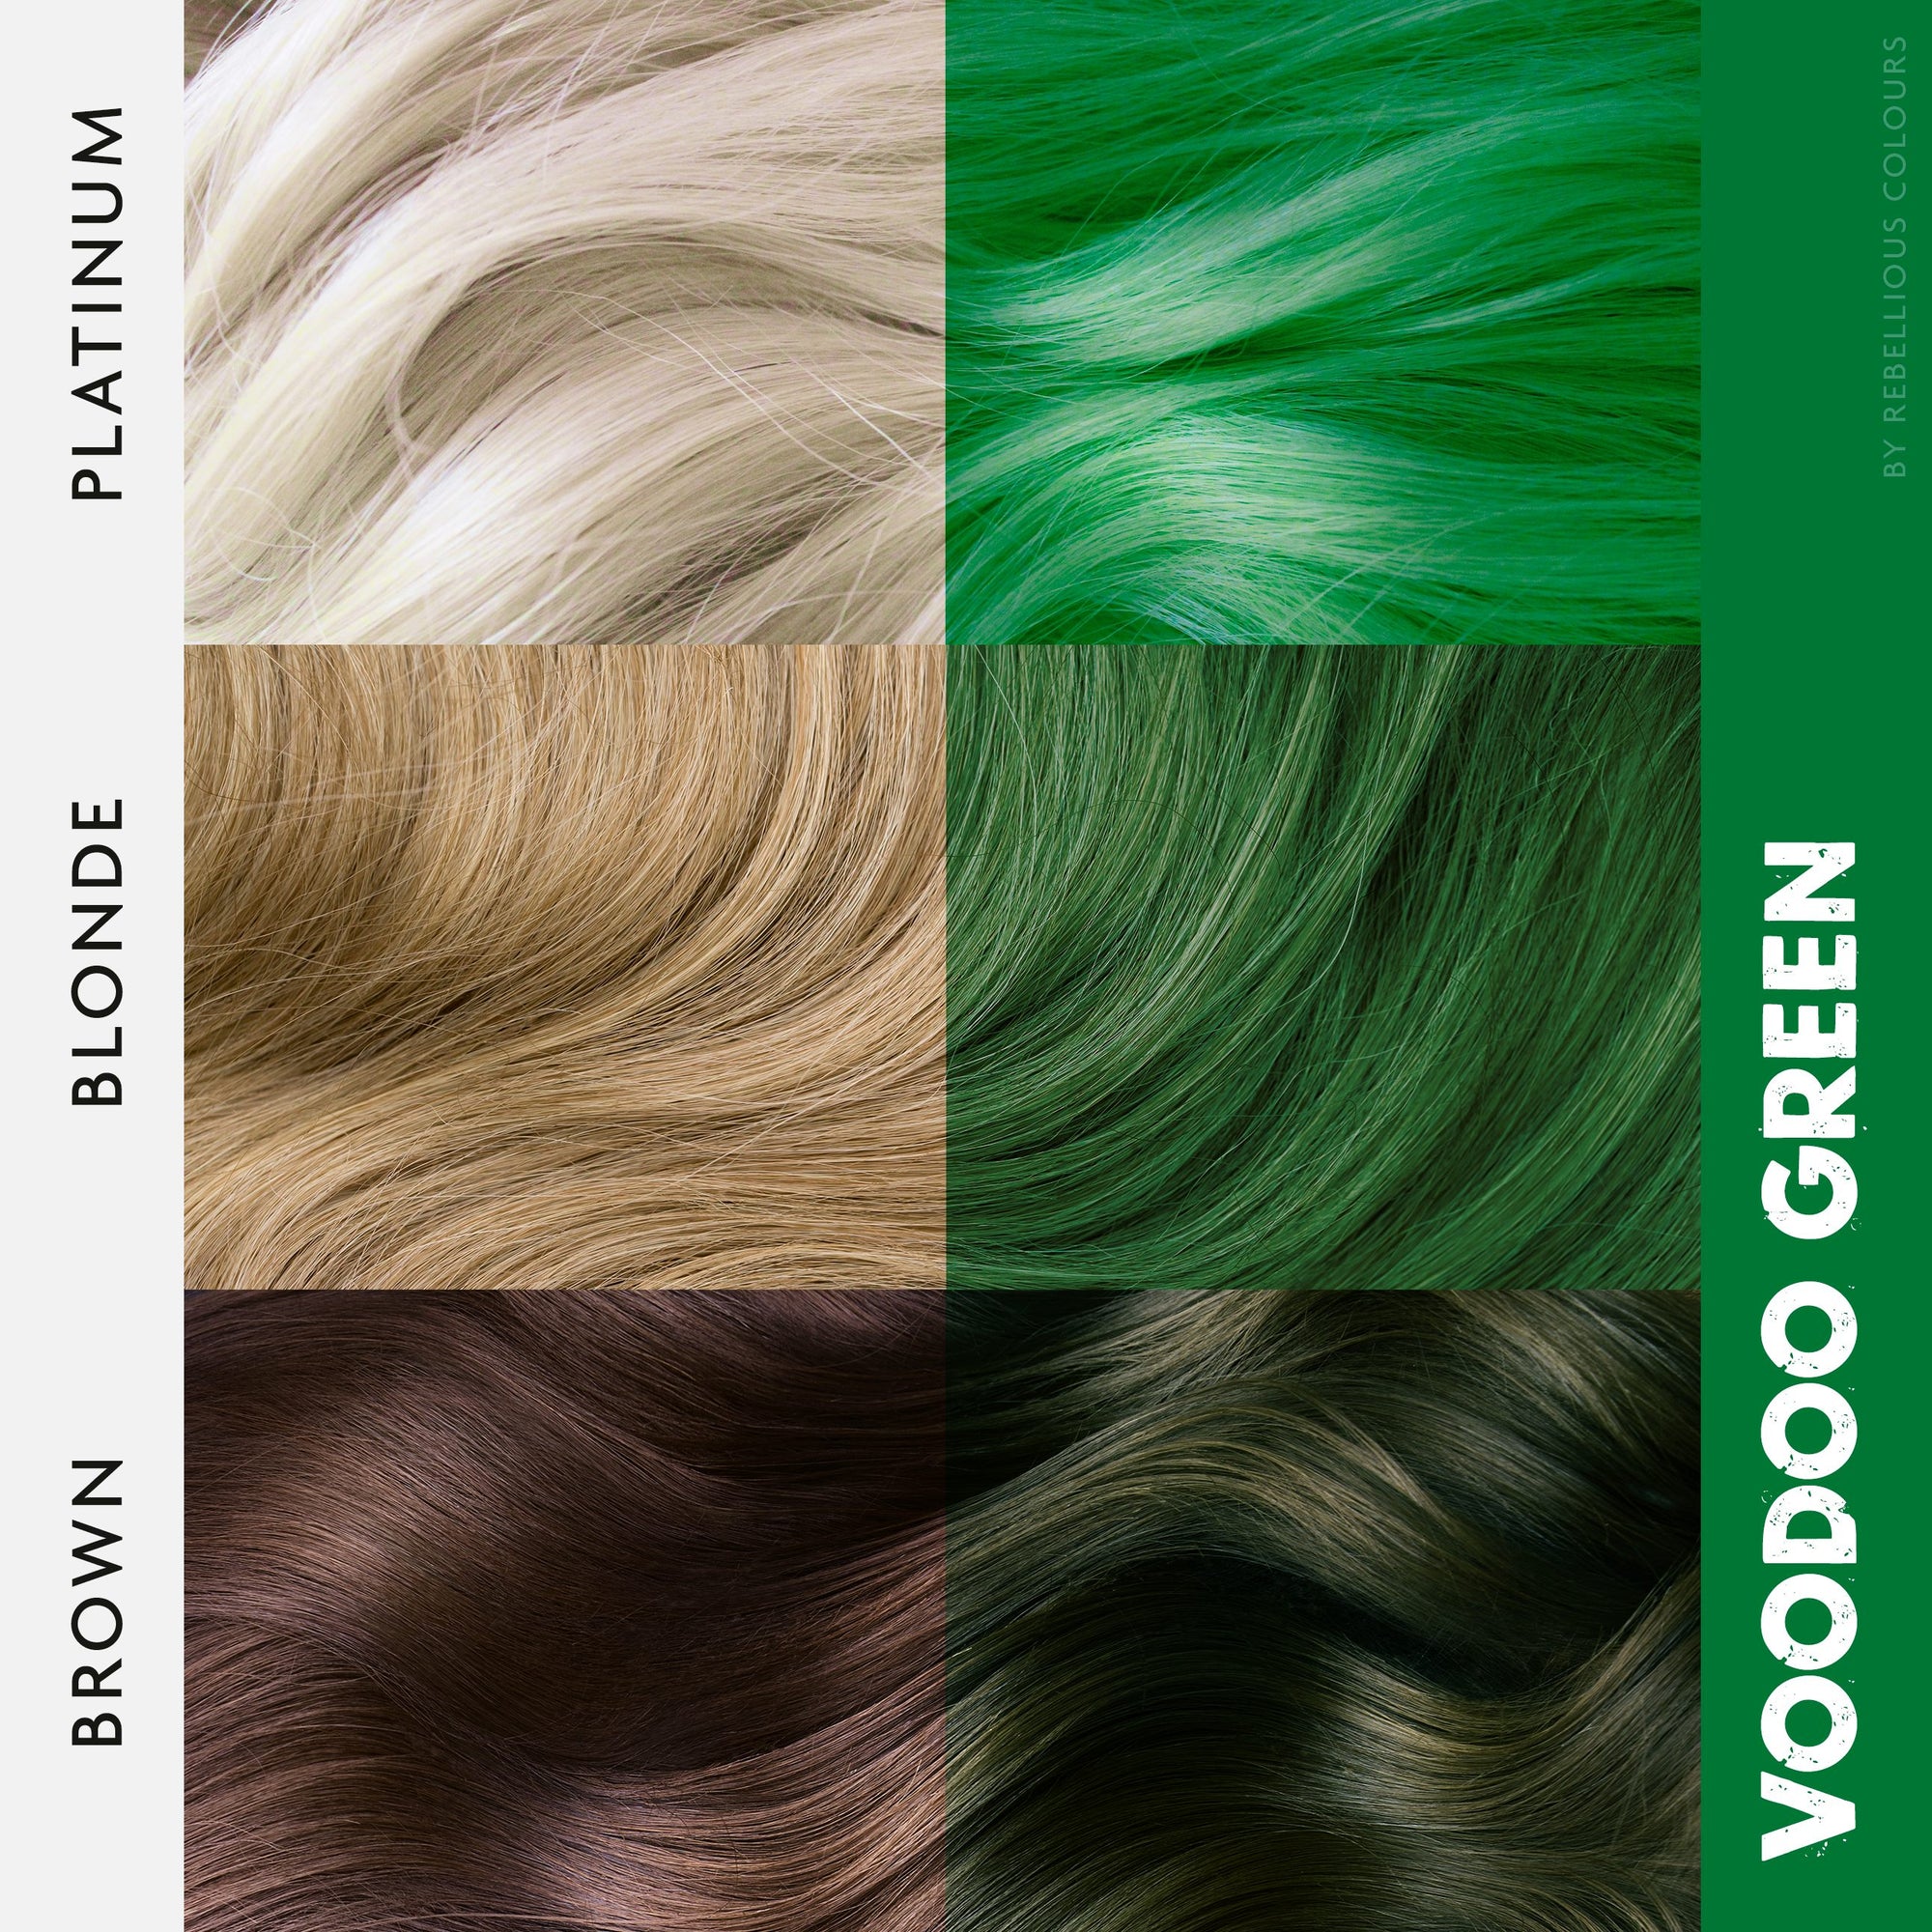 NEON UV GREEN HAIR DYE TUTORIAL 